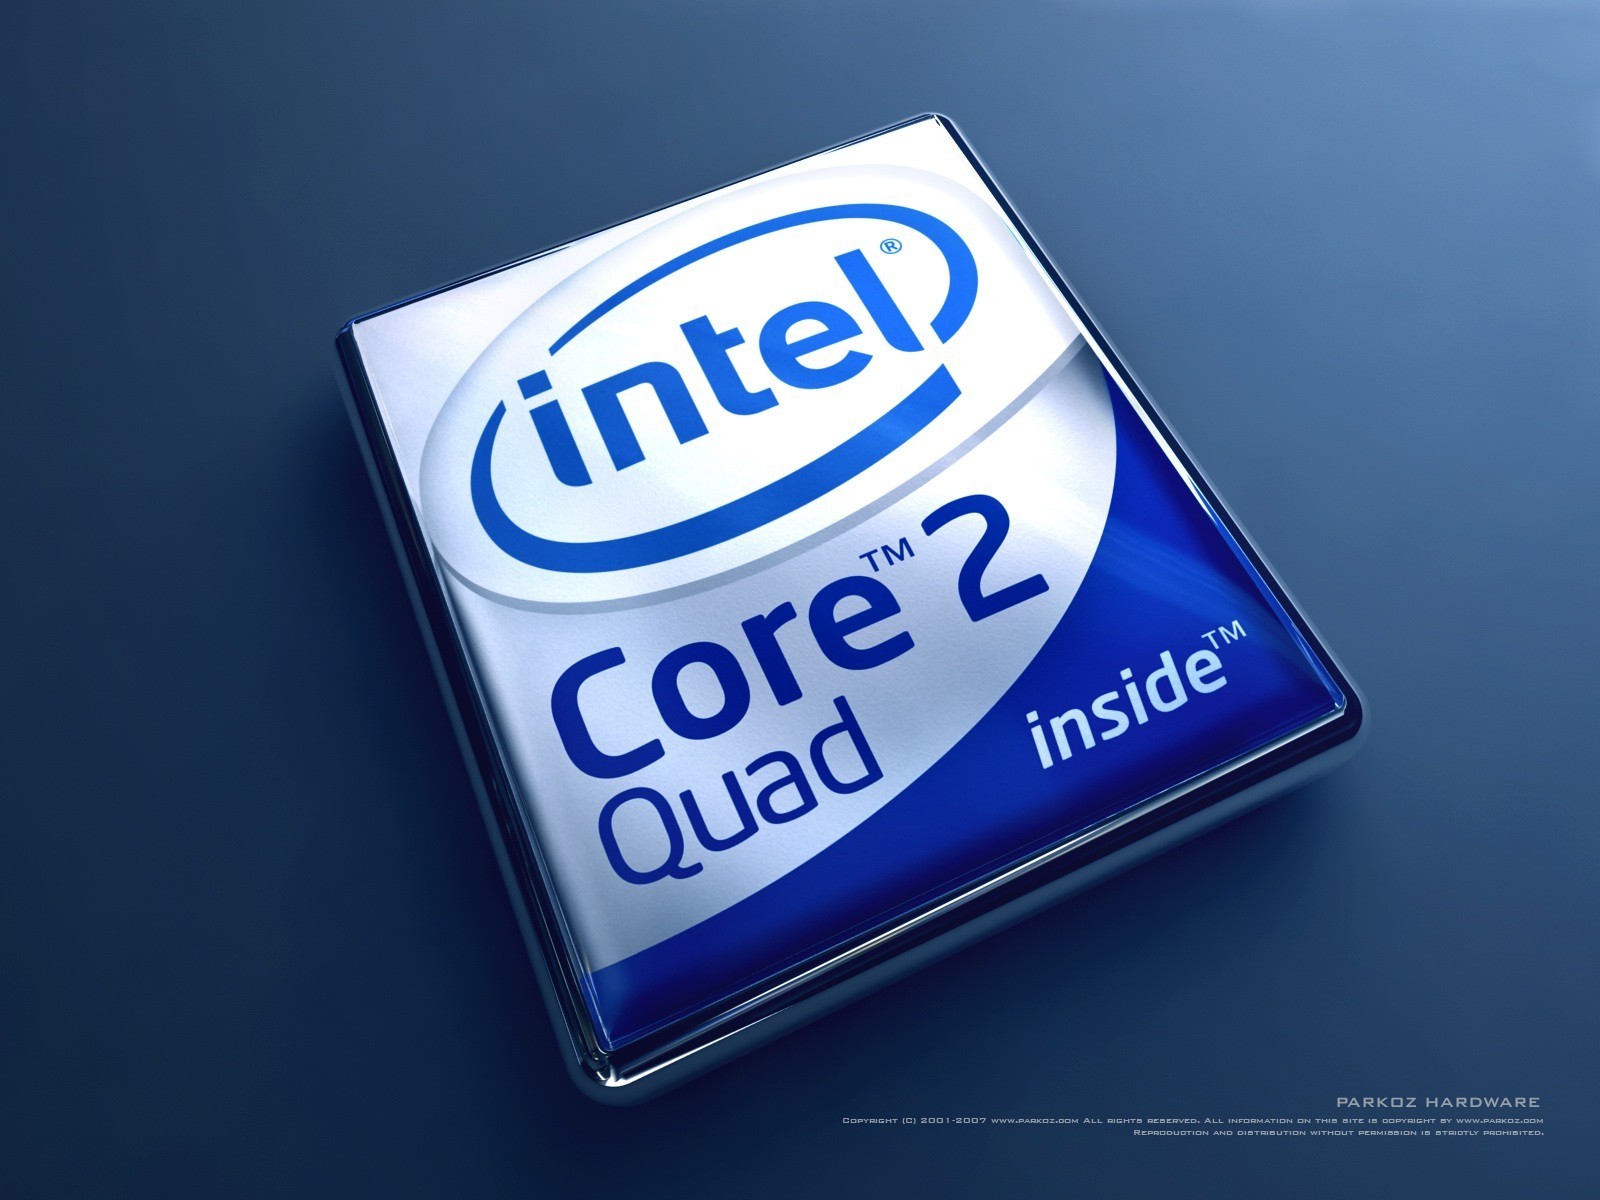 Звук интел. Intel Core 2 Duo inside. Интел Core 2 Duo. Intel Core 2 Duo logo. Процессор Intel Core 2 Quad.